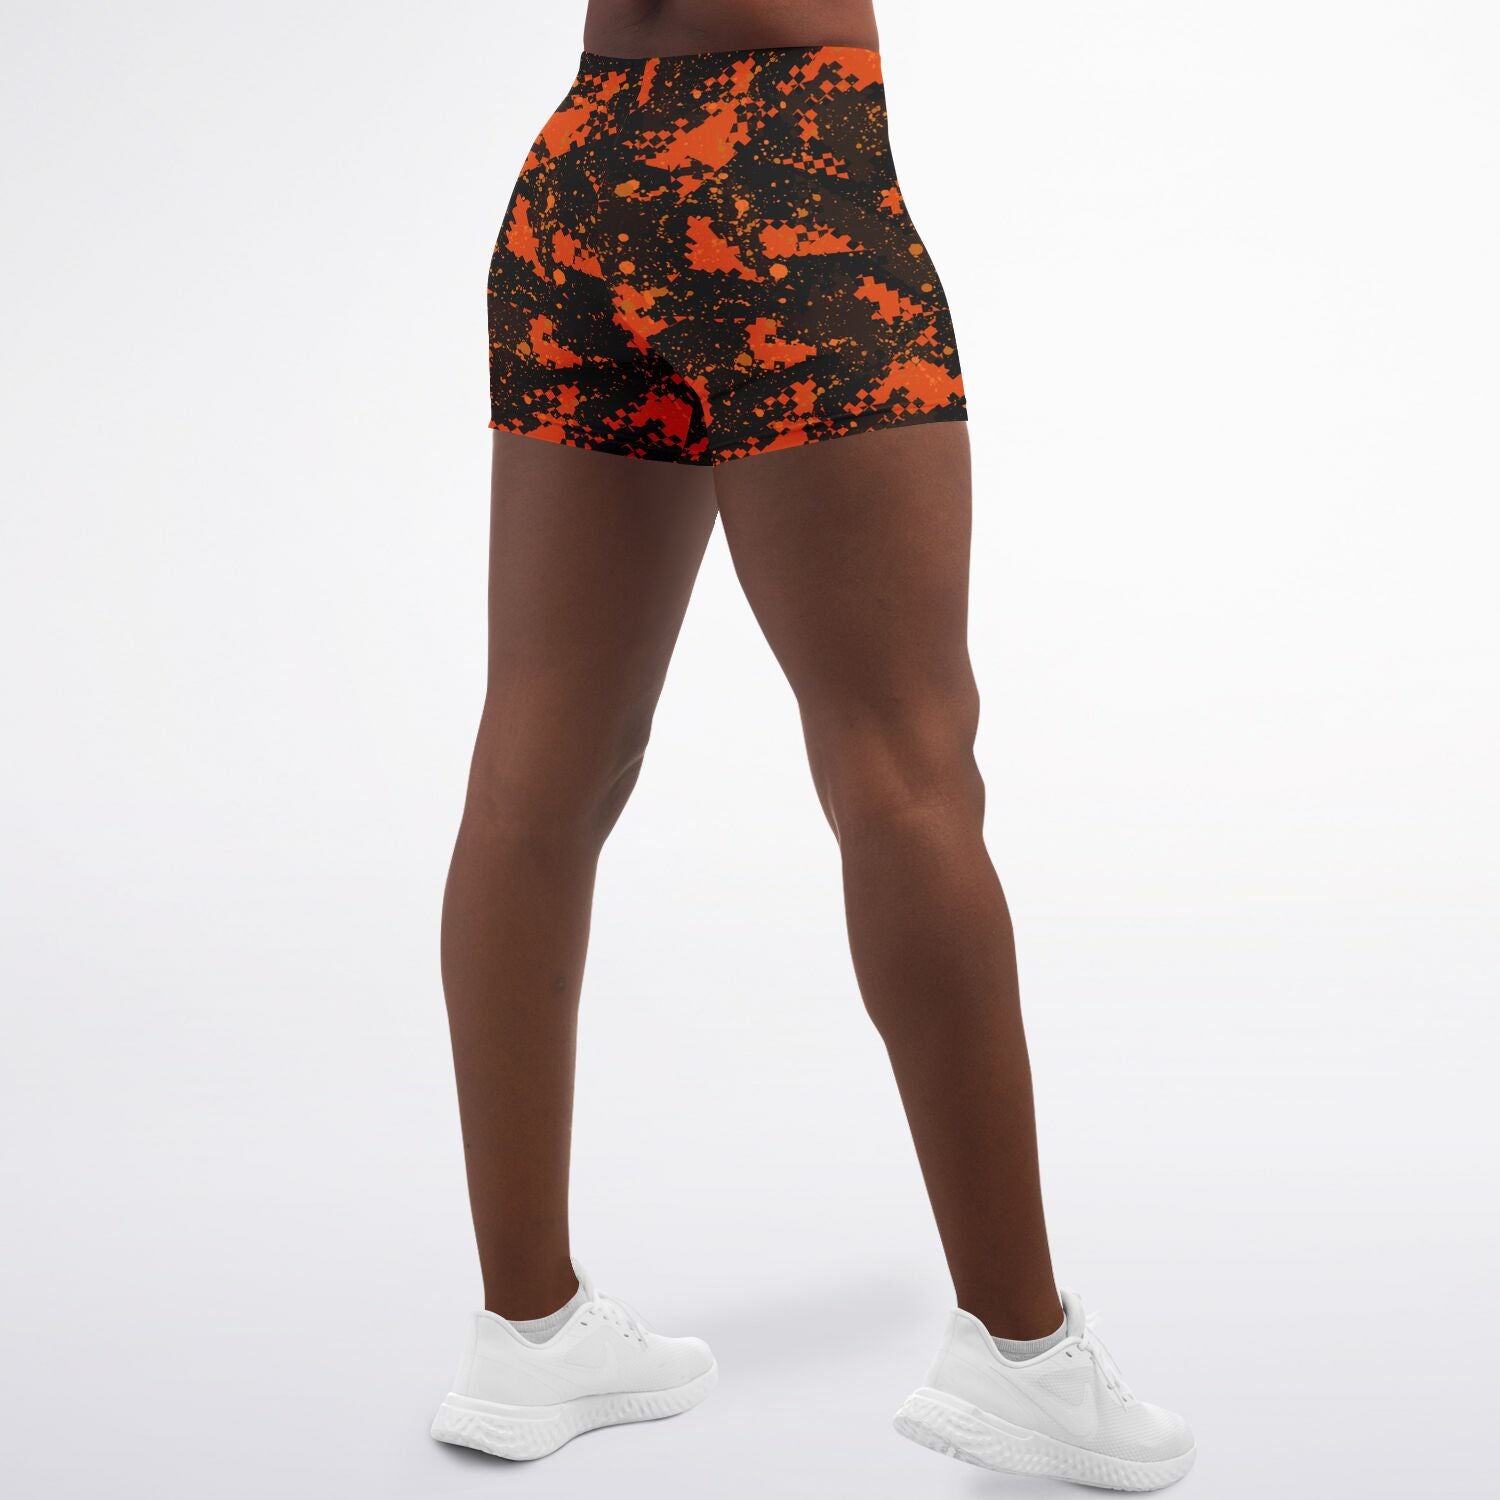 Women's Mid-rise Orange Digital Camouflage Athletic Booty Shorts